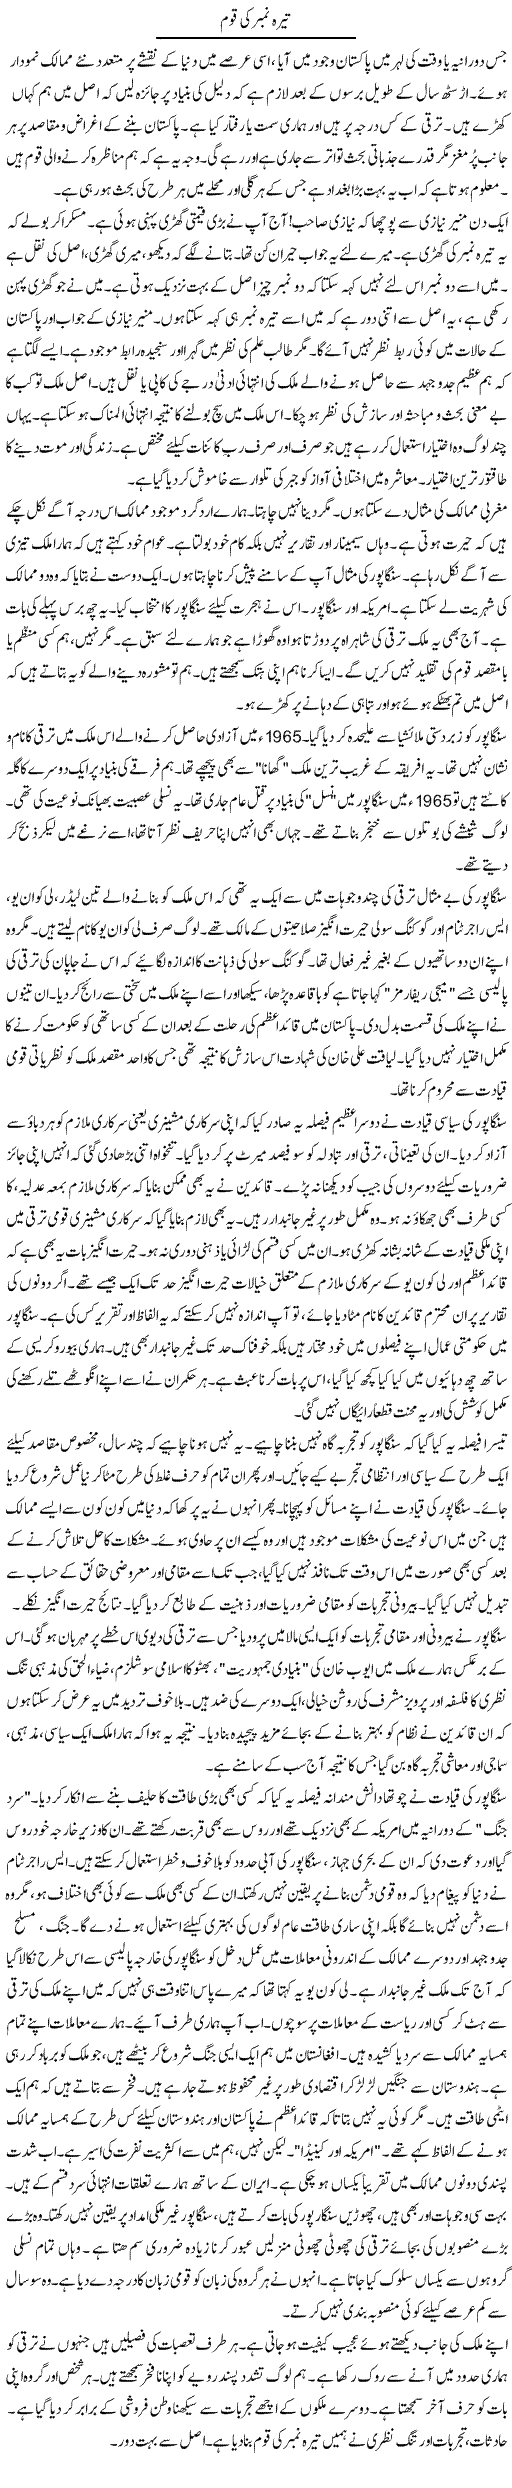 Terah Number Ki Qoum | Rao Manzar Hayat | Daily Urdu Columns